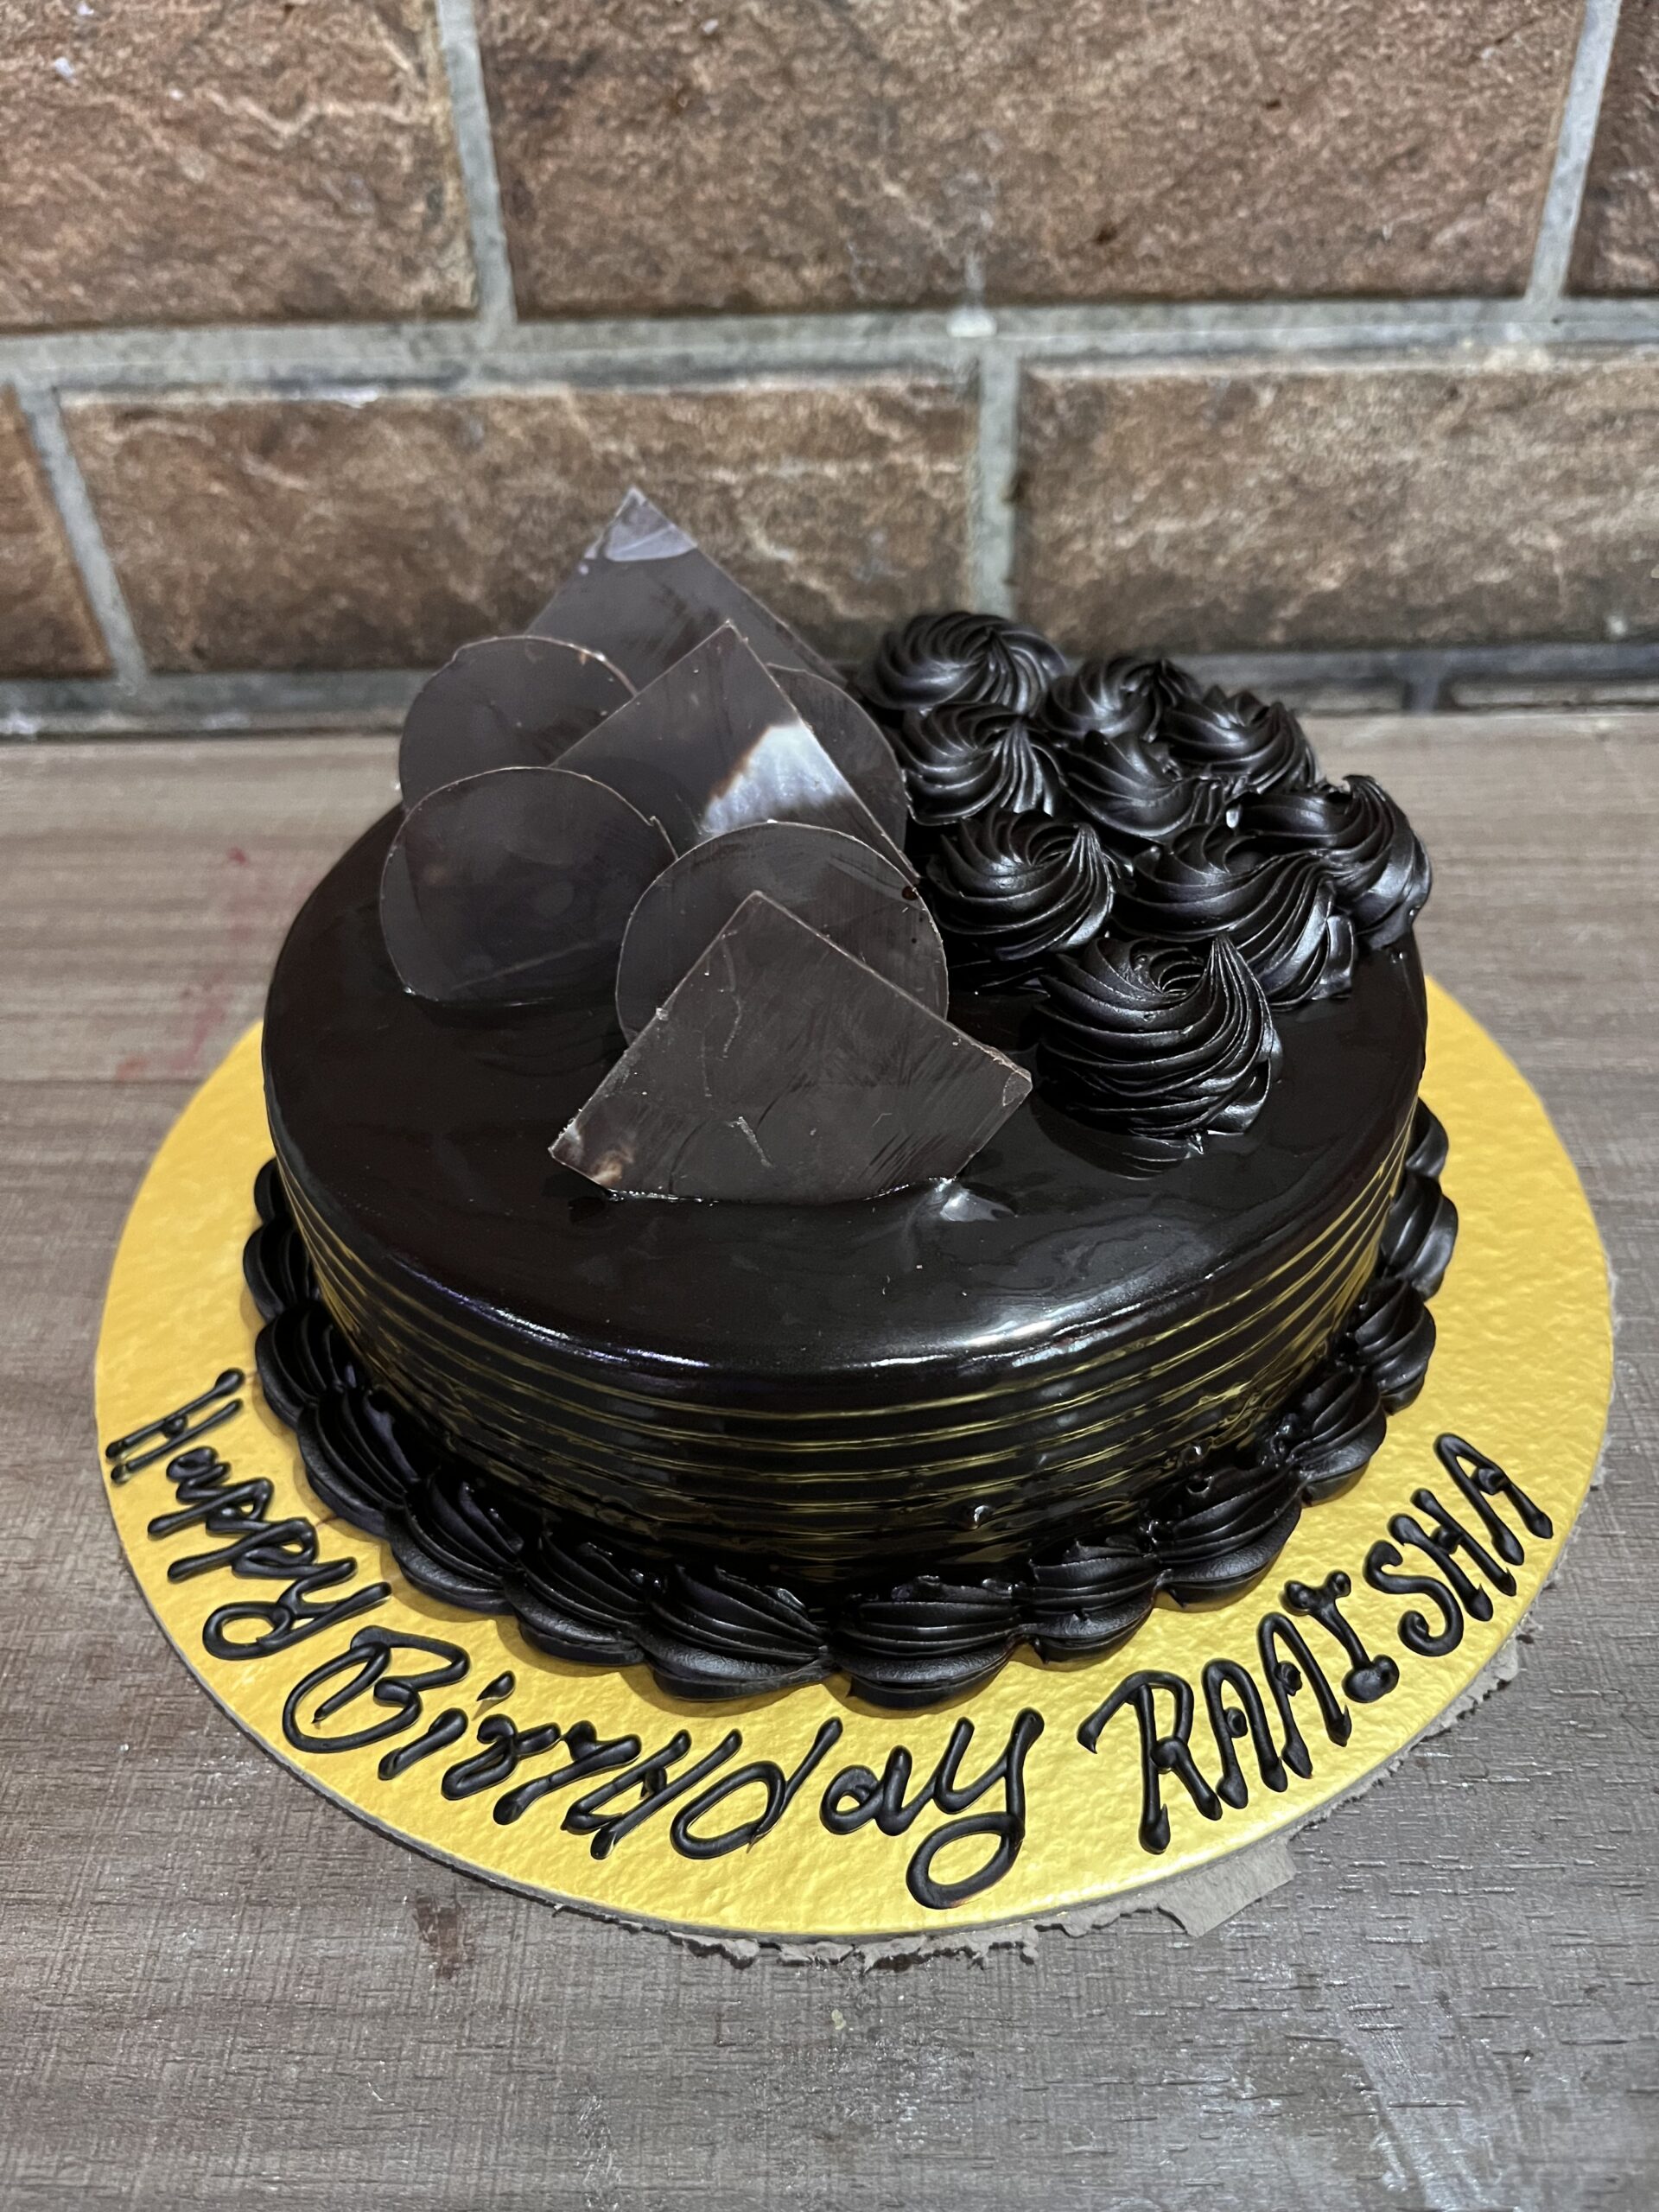 Chocolate Cake Roll Recipe - The Tattler